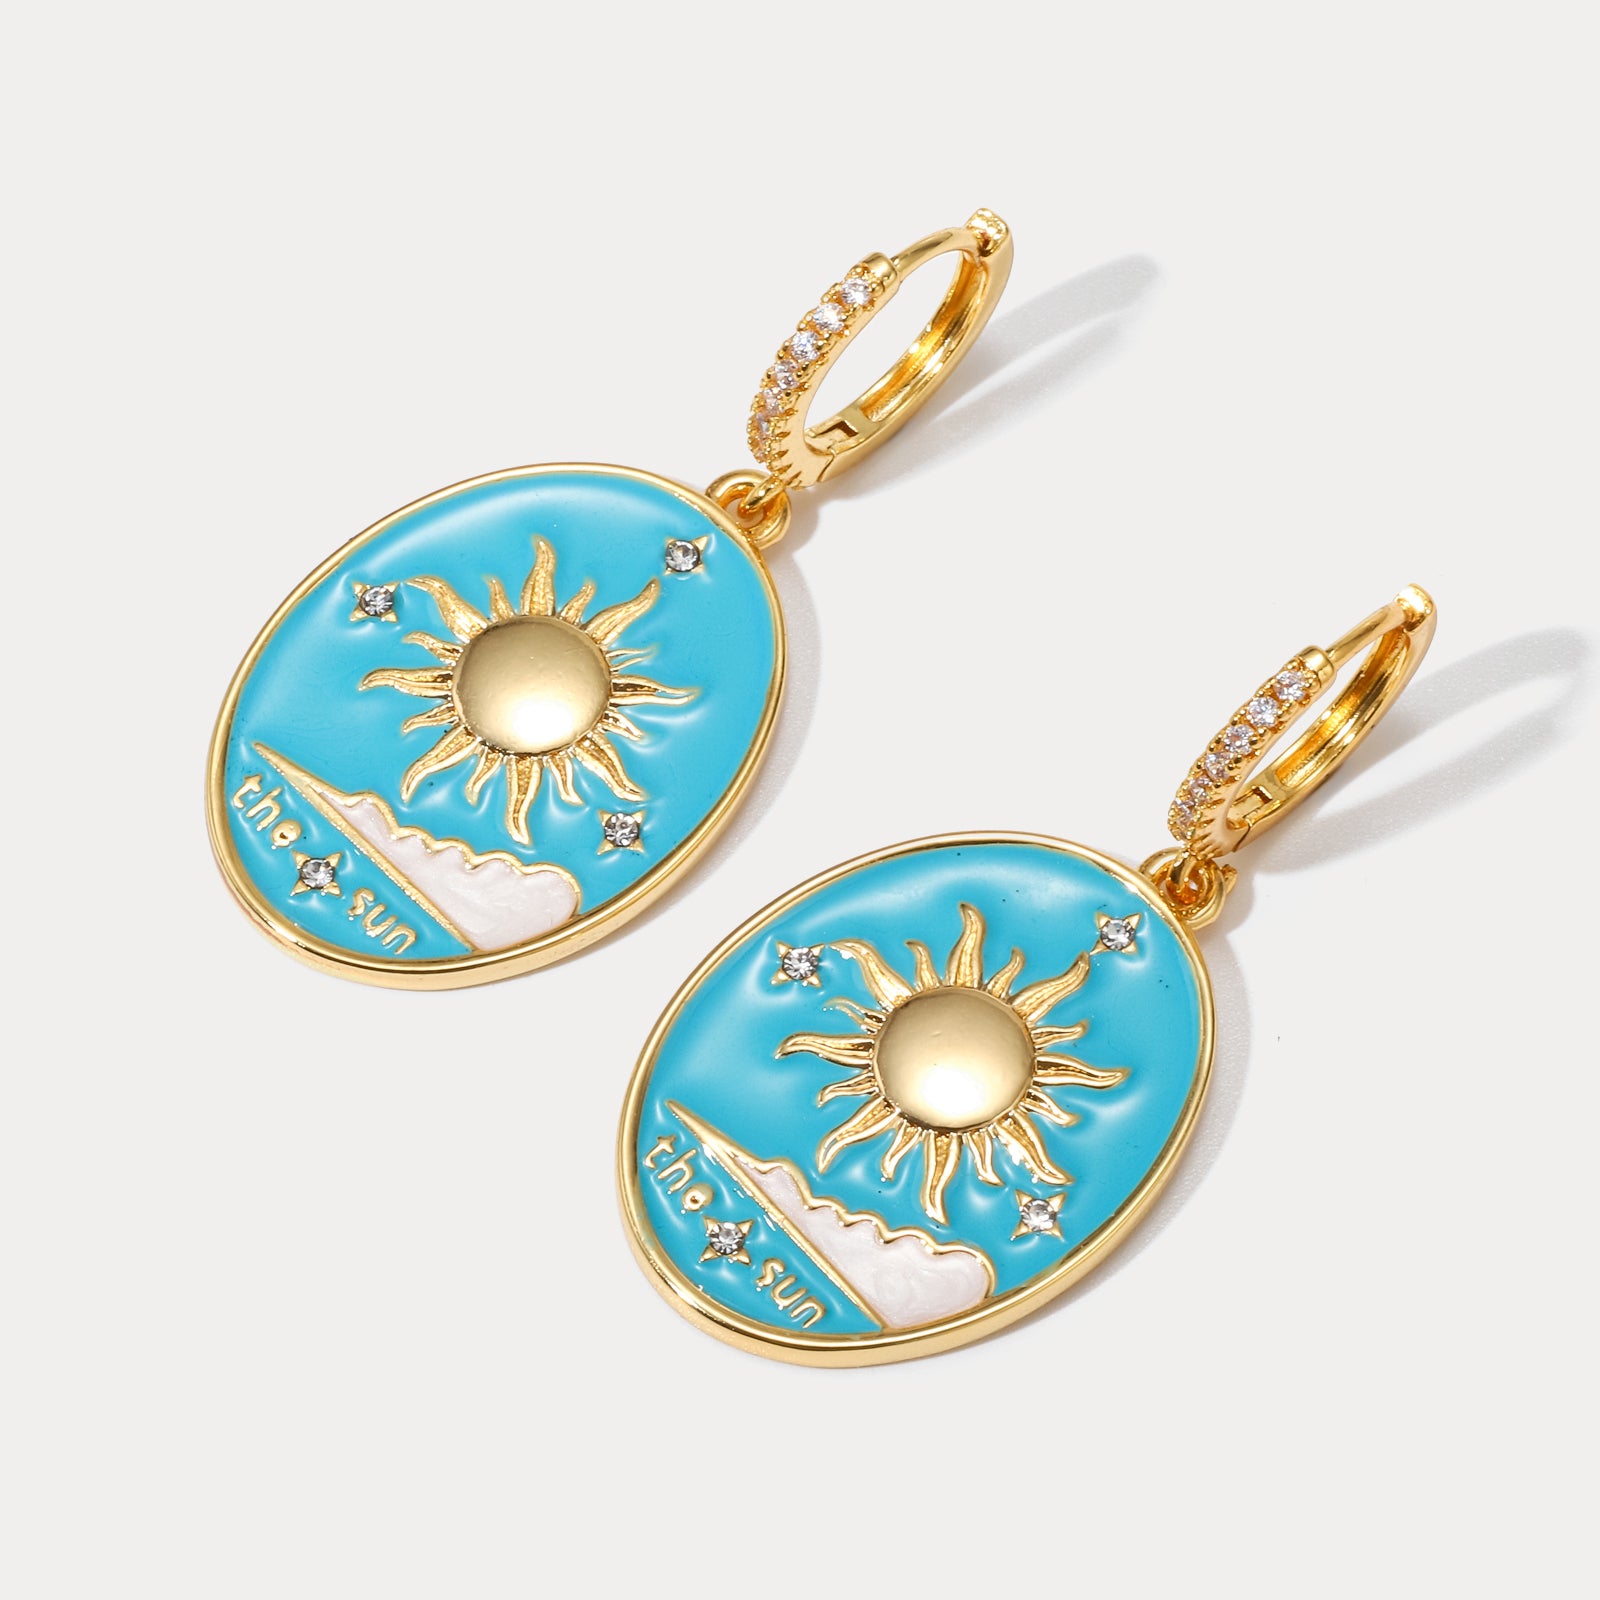 The Sun Tarot Diamond Earrings